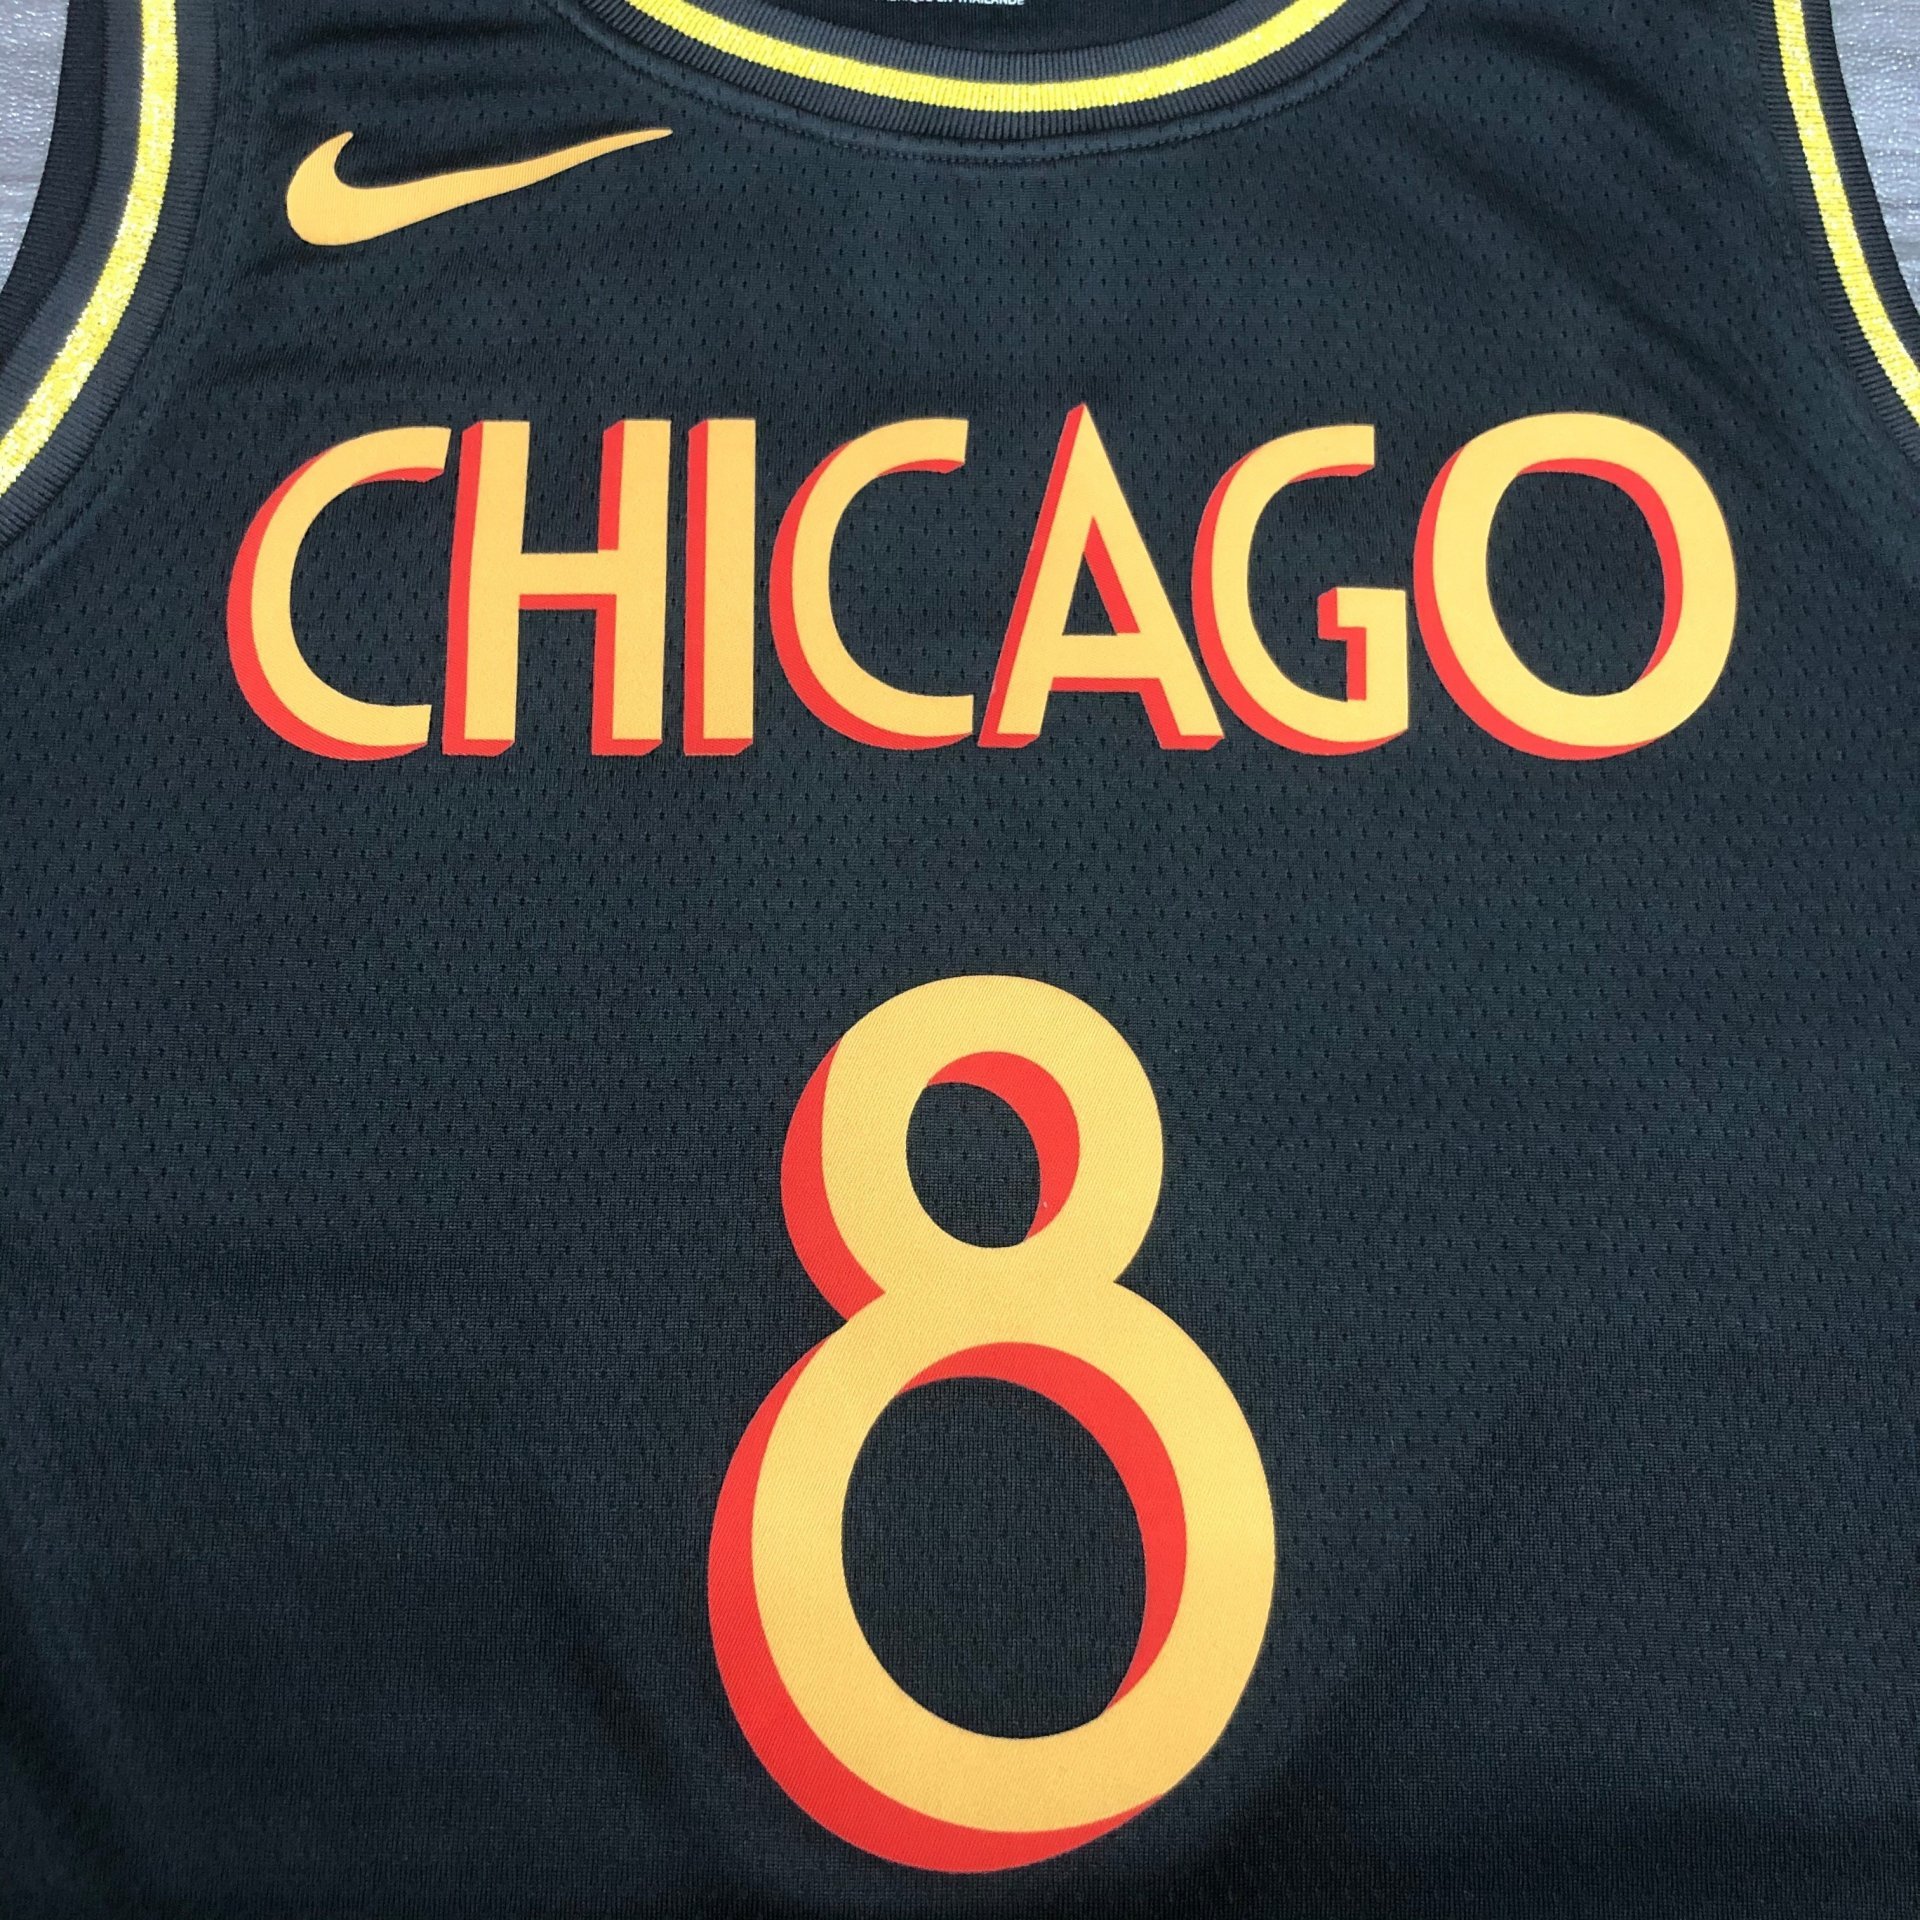 Zach LaVine Chicago Bulls Nike Youth 2020/21 Swingman Jersey Black - City  Edition